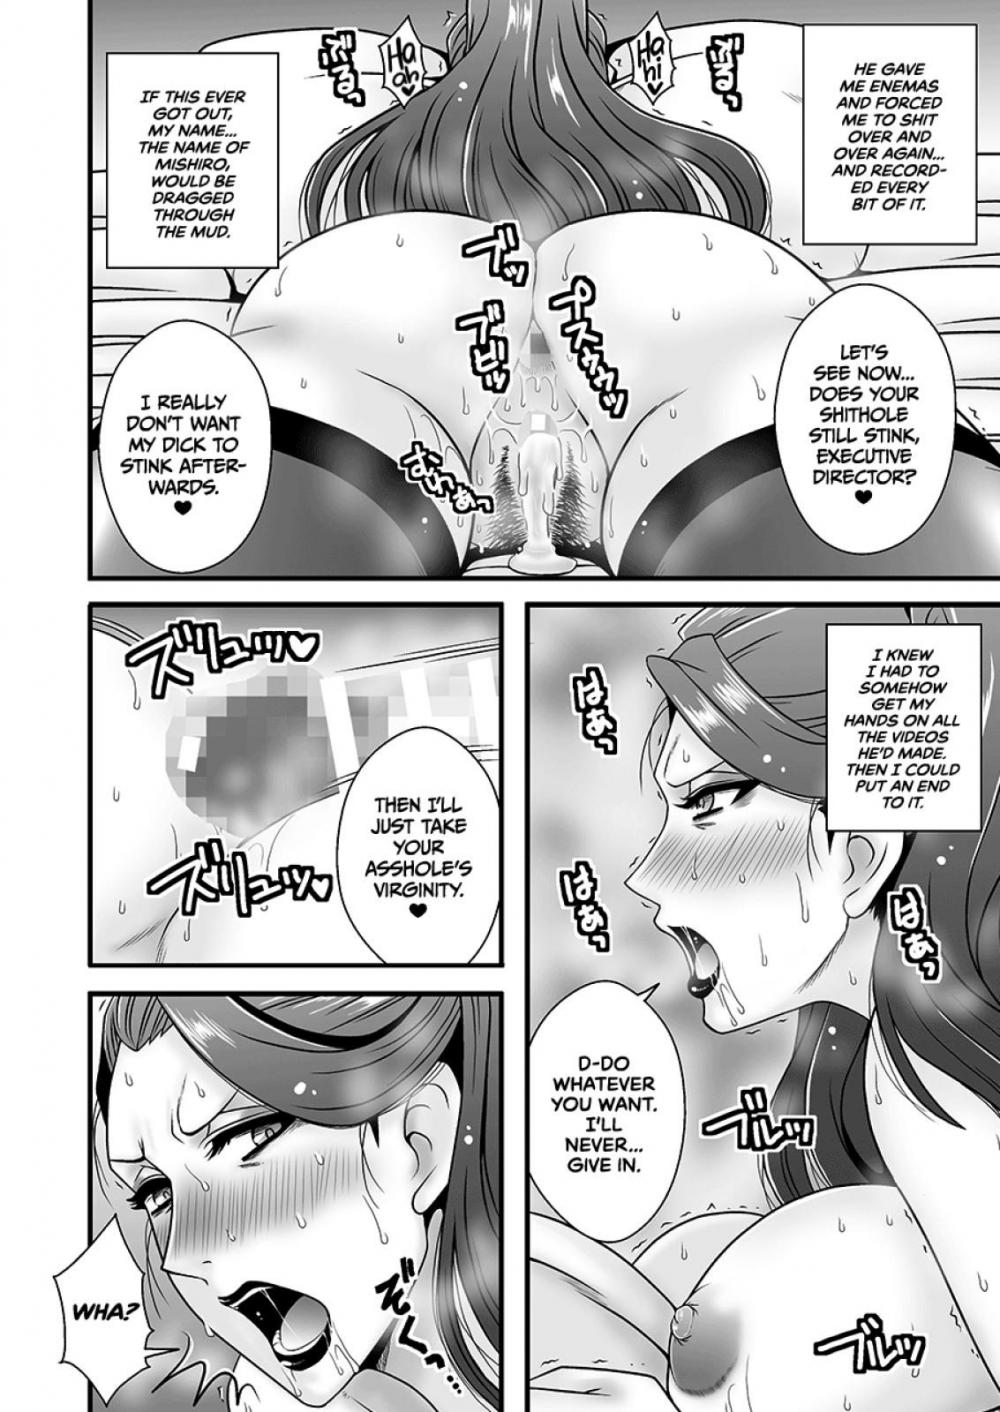 Hentai Manga Comic-Beautiful MILF Mishiro_Raped by Her Younger Subordinate-Read-21